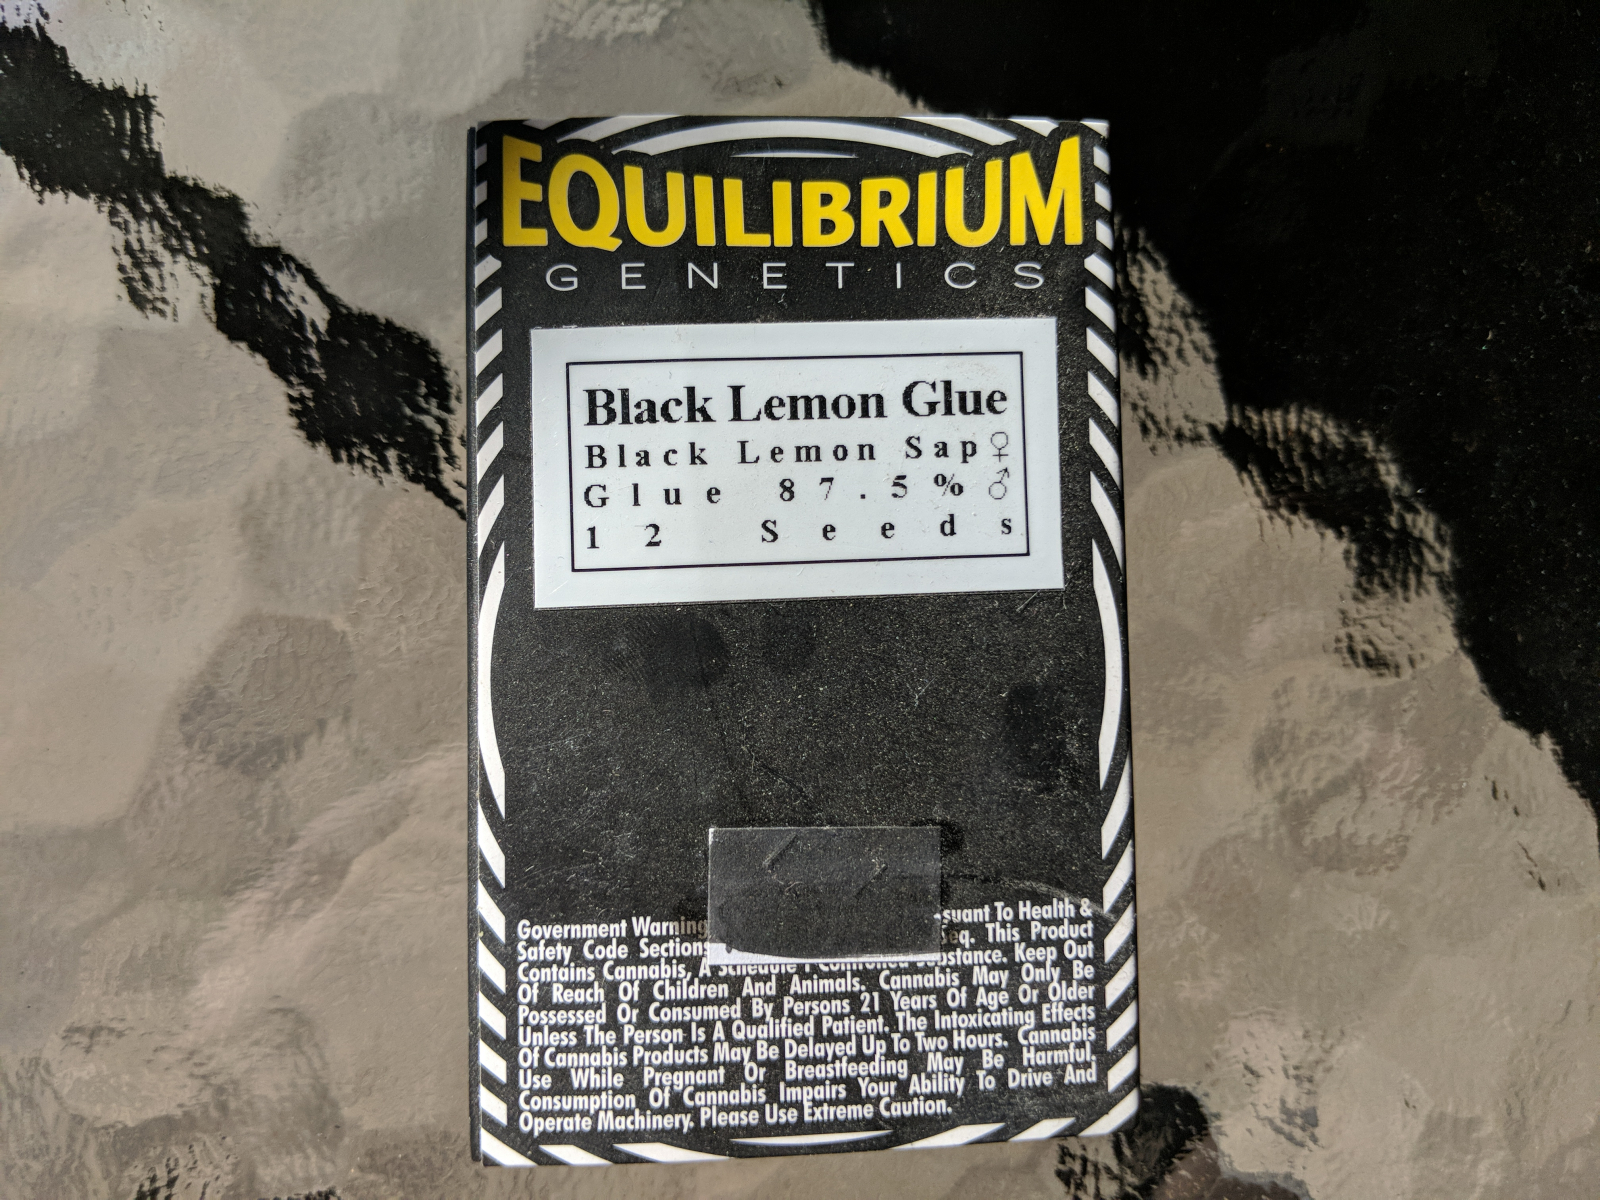 Equilibrium genetics black lemon glue 12 seeds